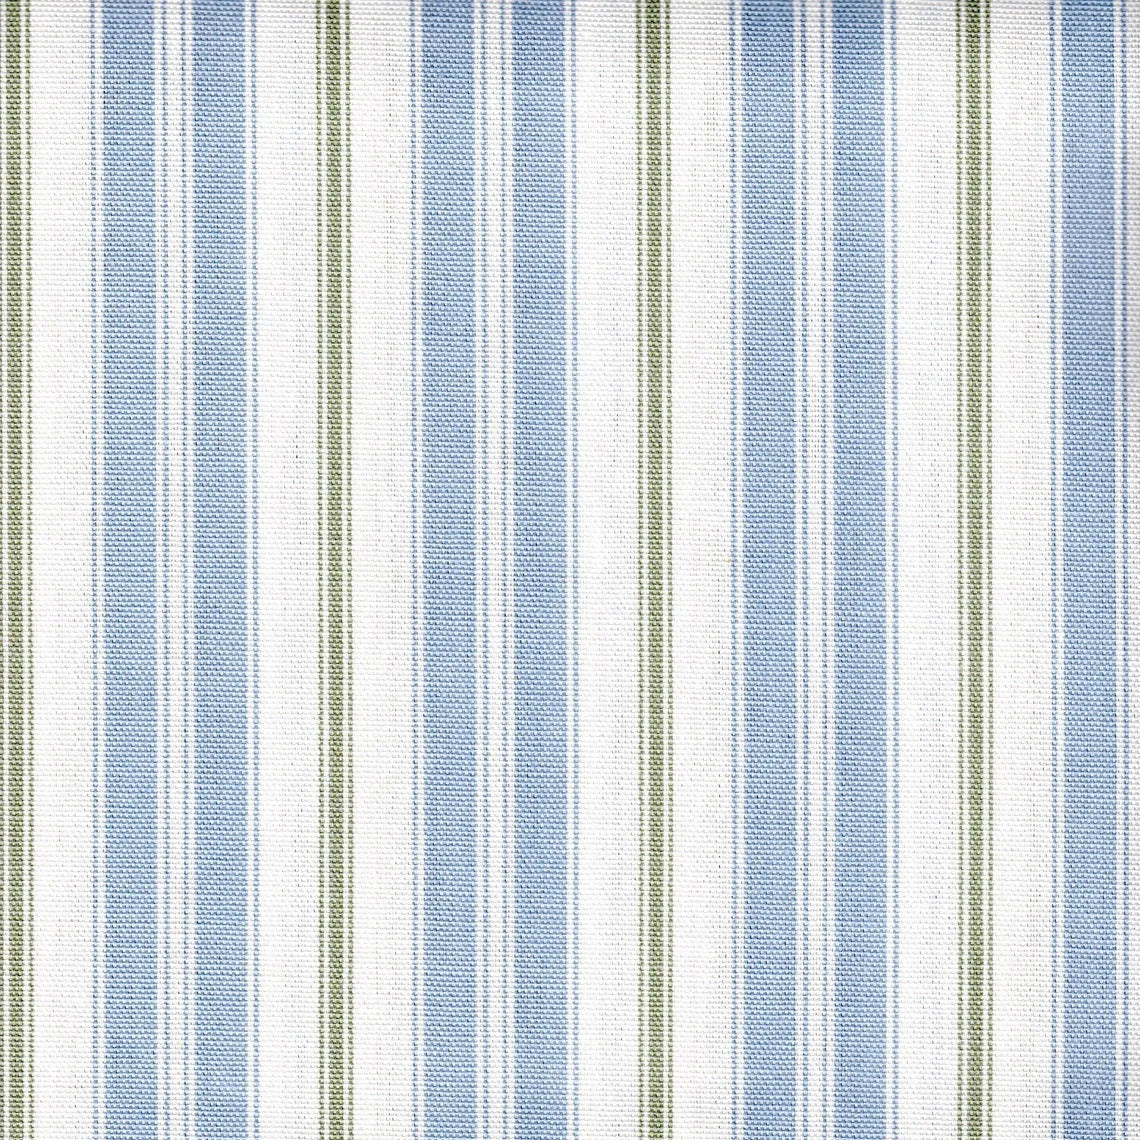 duvet cover in newbury antique blue stripe- blue, green, white